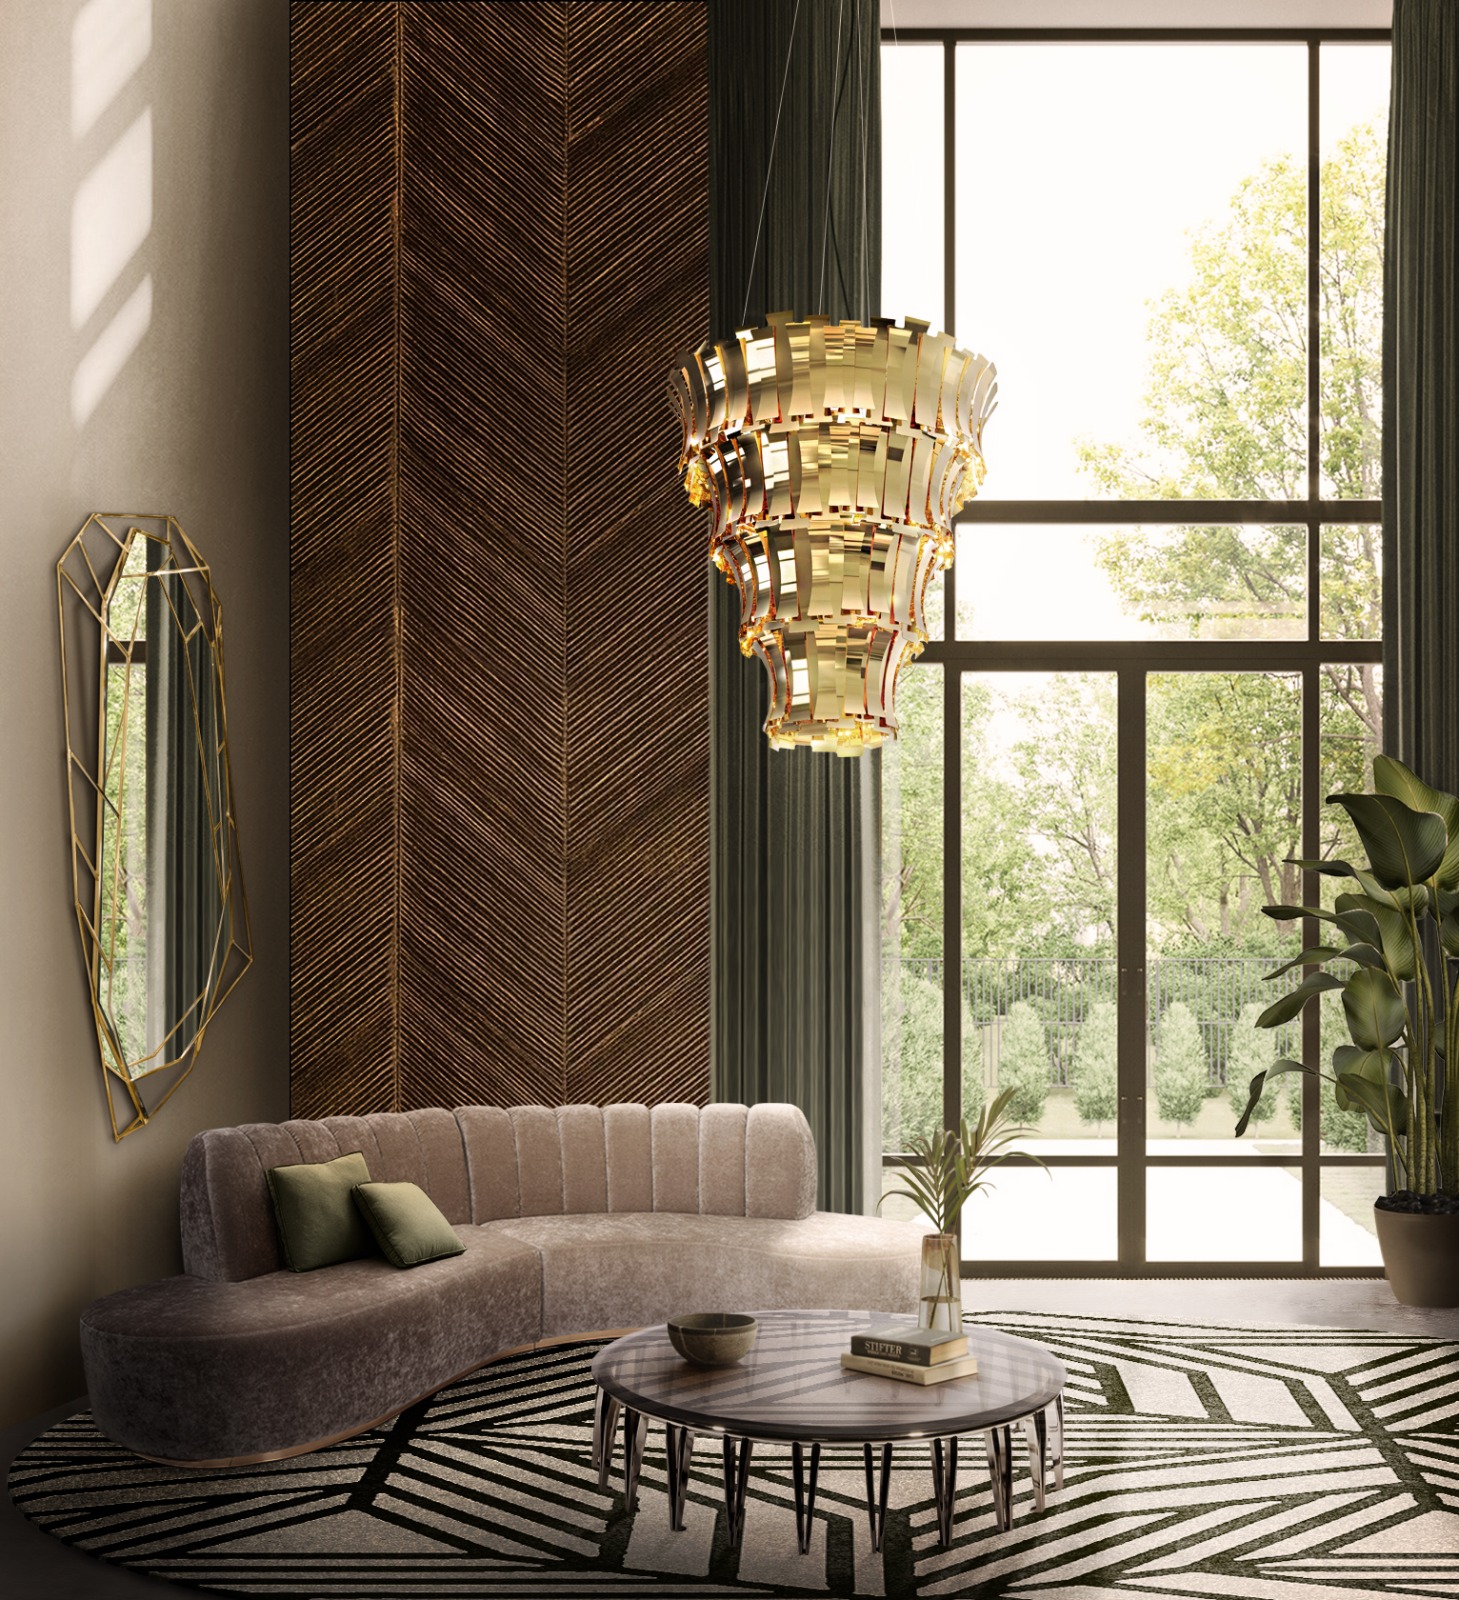 Hallway Designs That Lead To Fantastic Living Room Ideas!